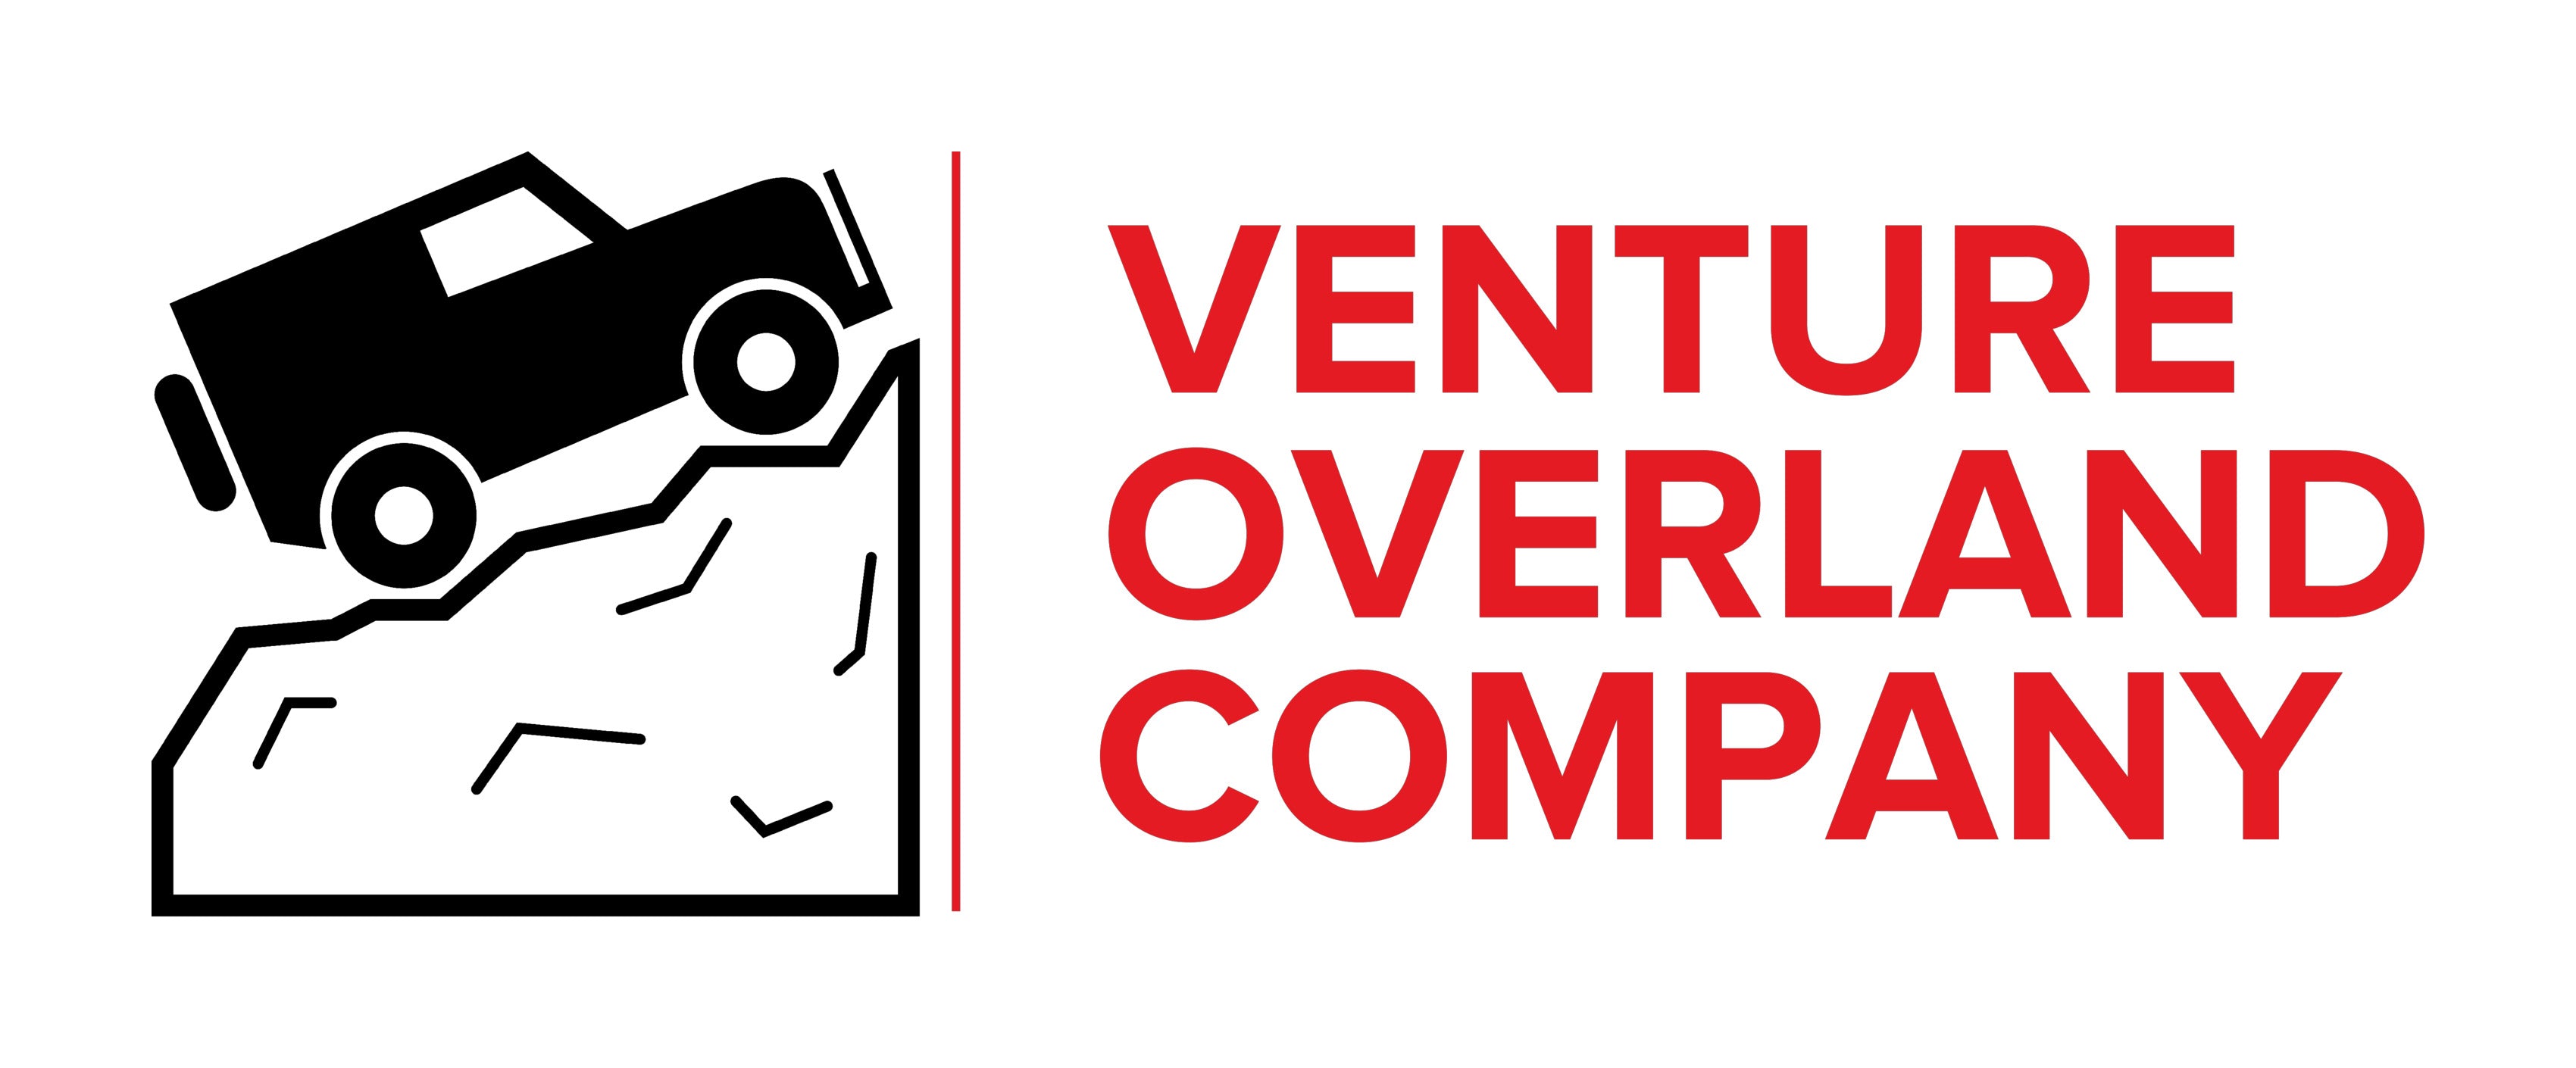 Venture Overland Company